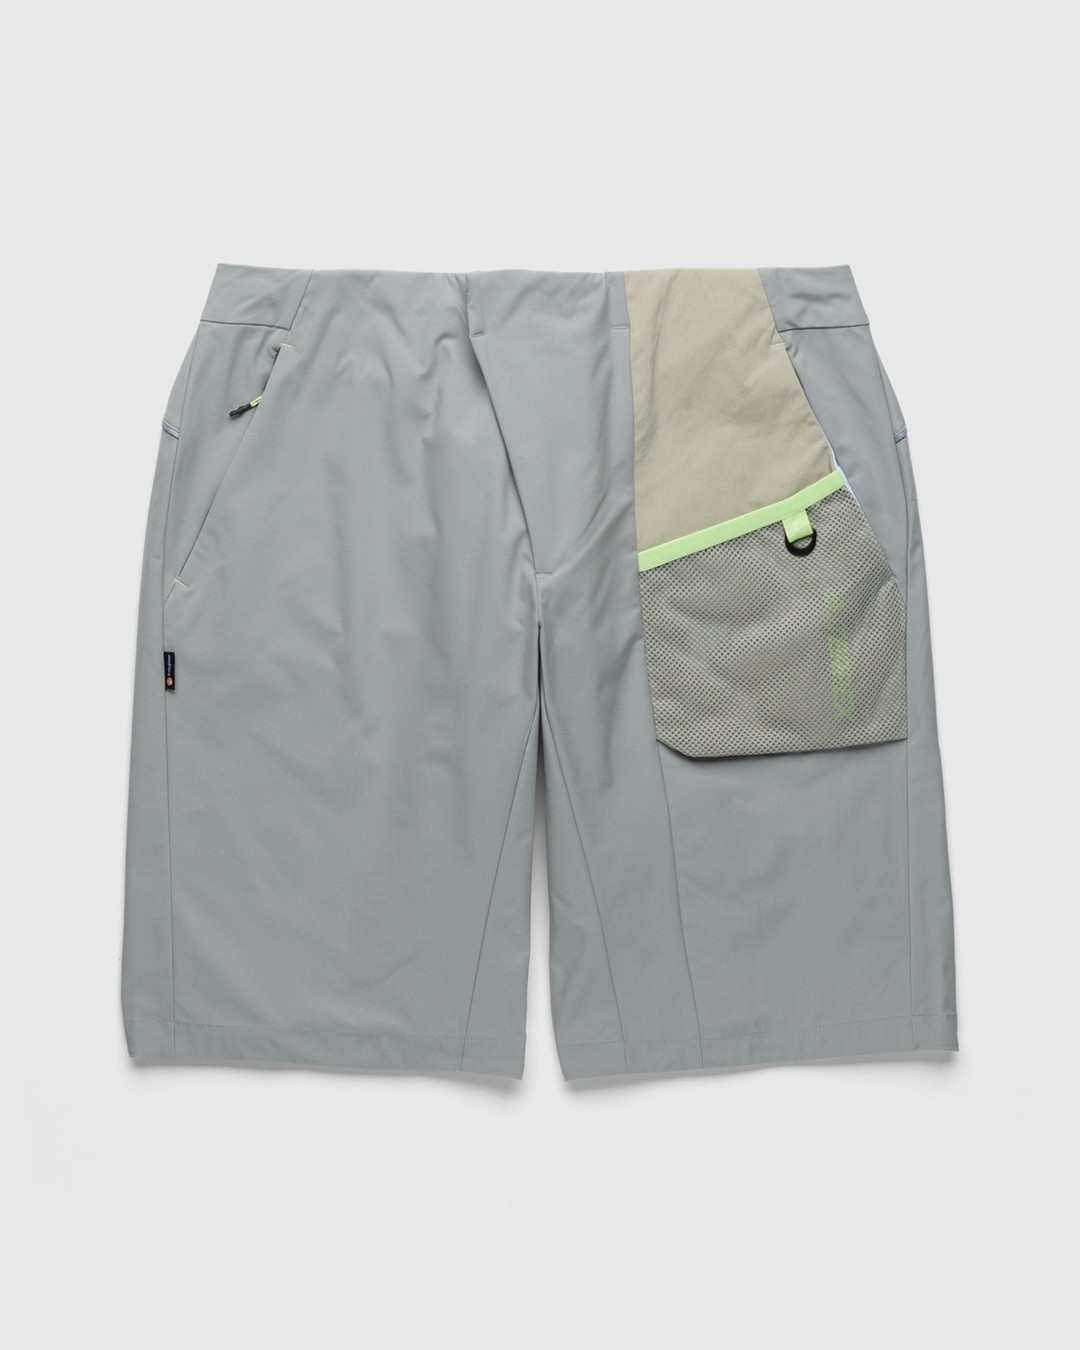 Adidas – Voyager Shorts Feather Grey/Savanna - Active Shorts - Beige - Image 1